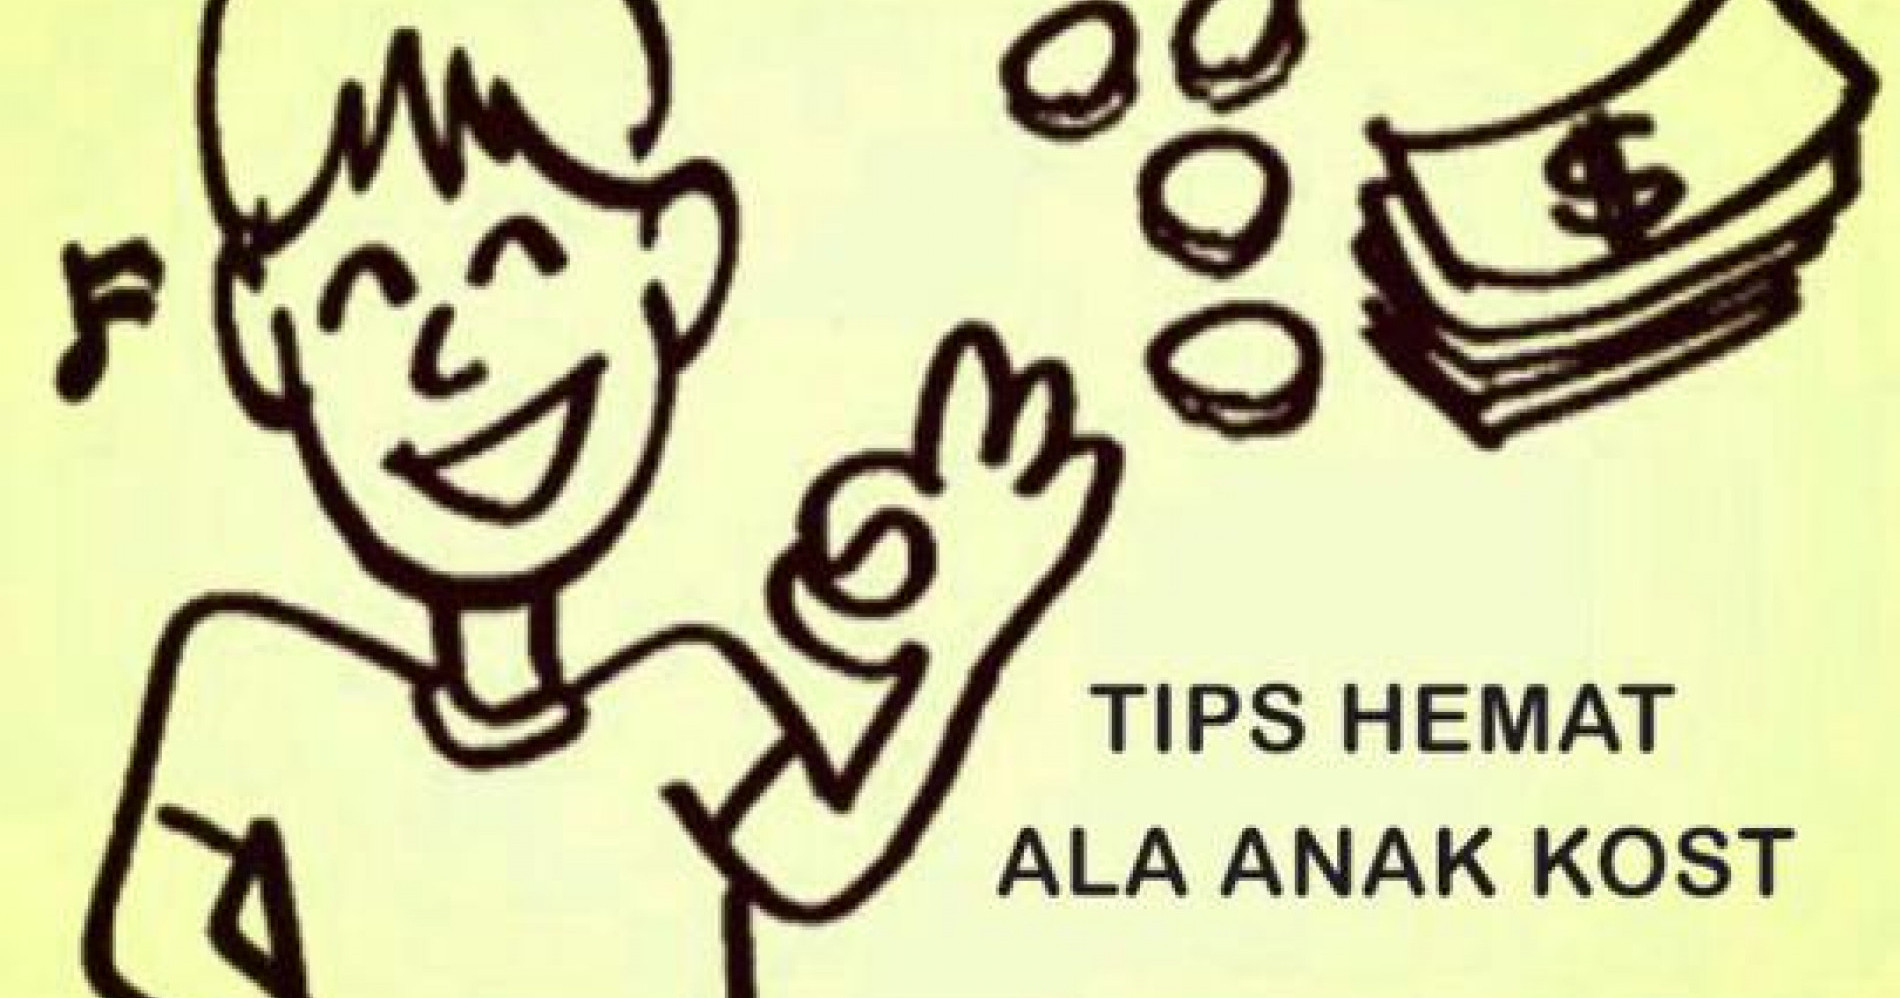 Tips hemat ala anak kos (Sumber gambar: m.kaskus.co.id)